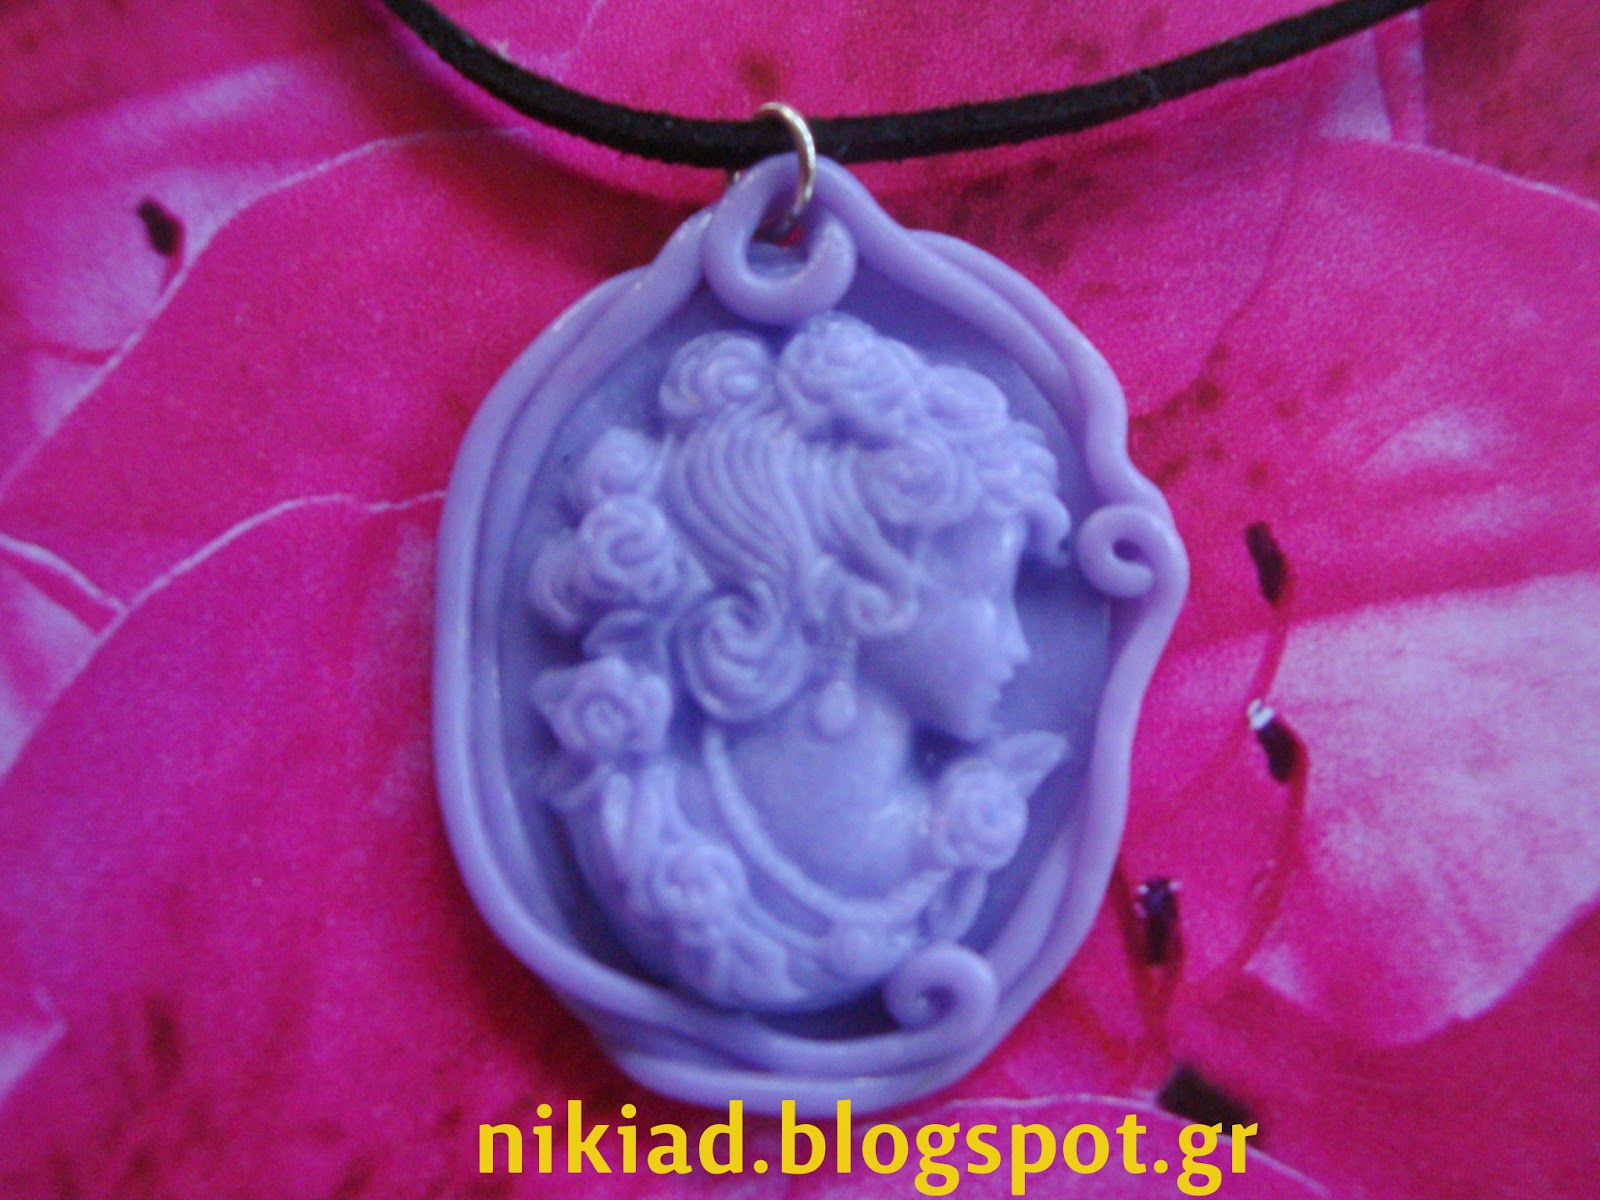 http://nikiad.blogspot.gr/2014/03/polymer-clay-cameo-jewellery.html